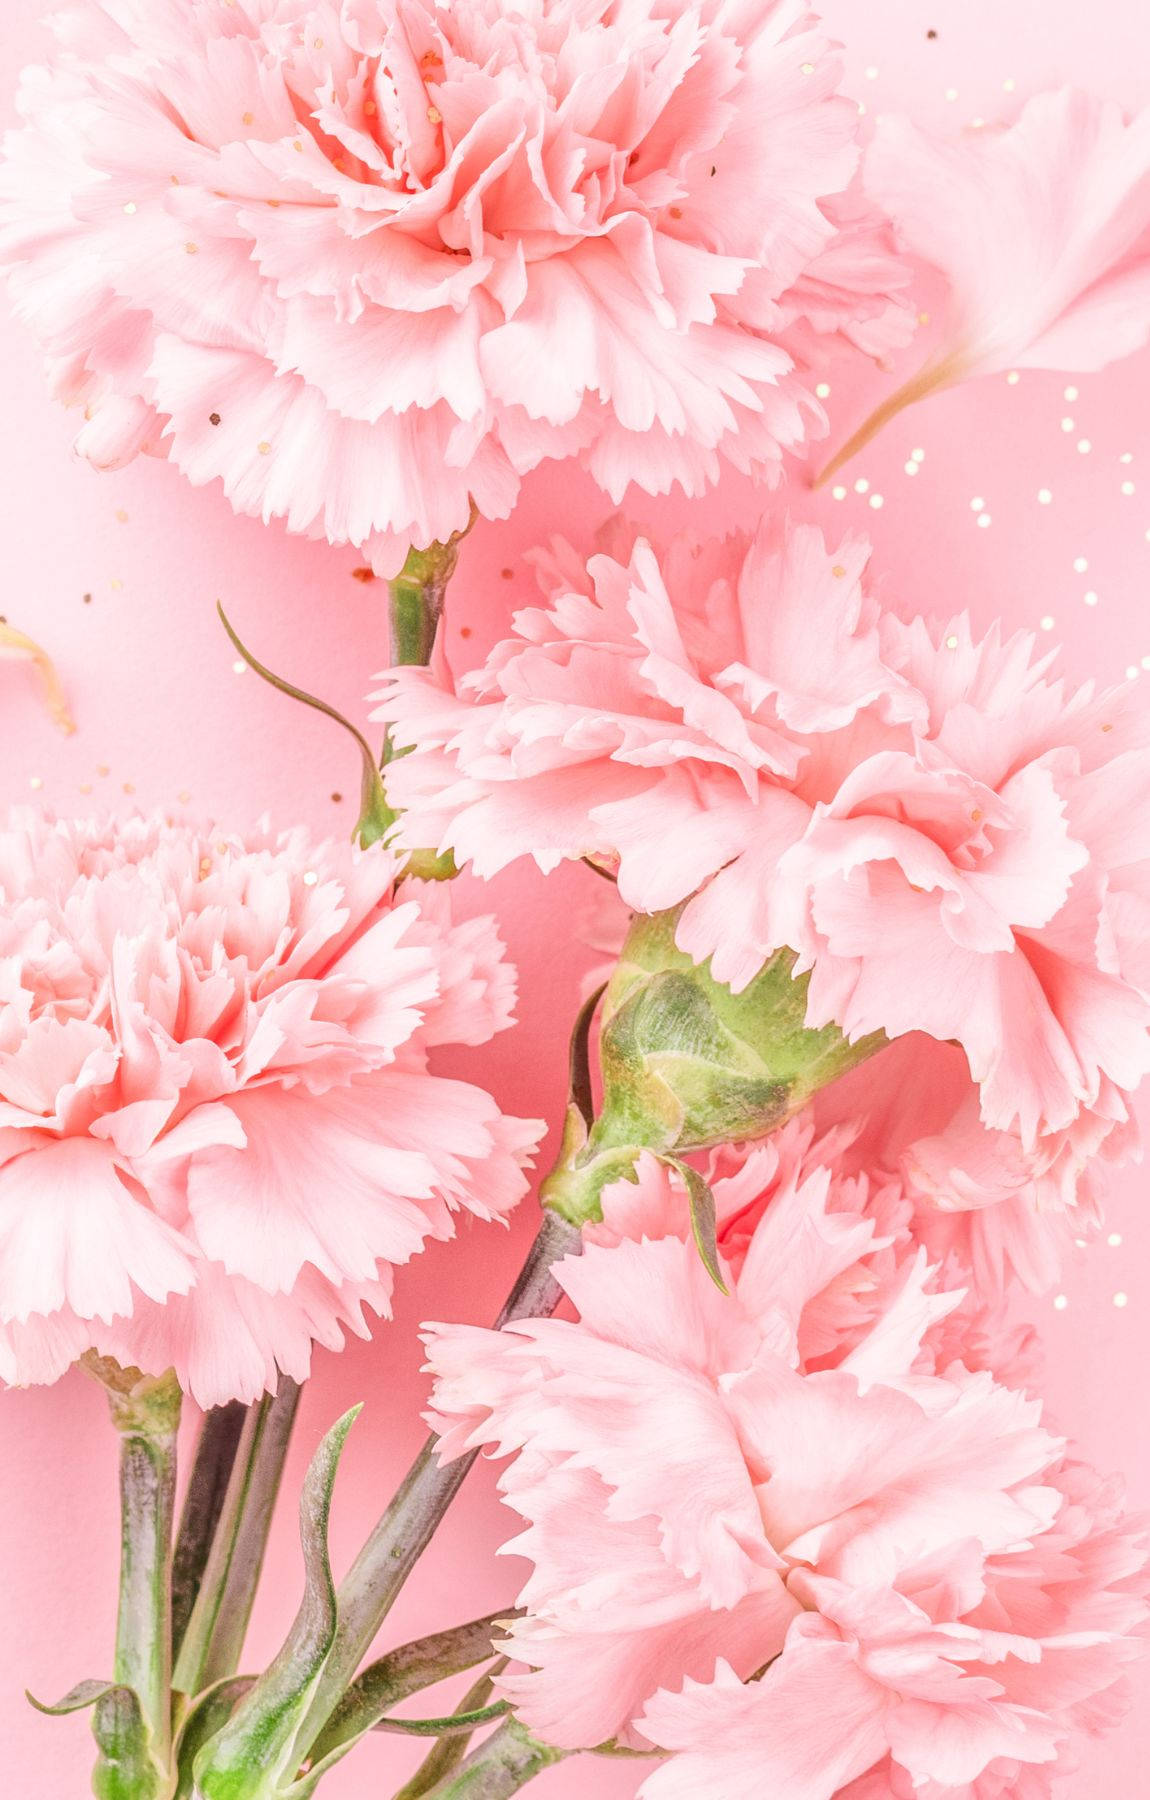 Pink Carnation Flowers